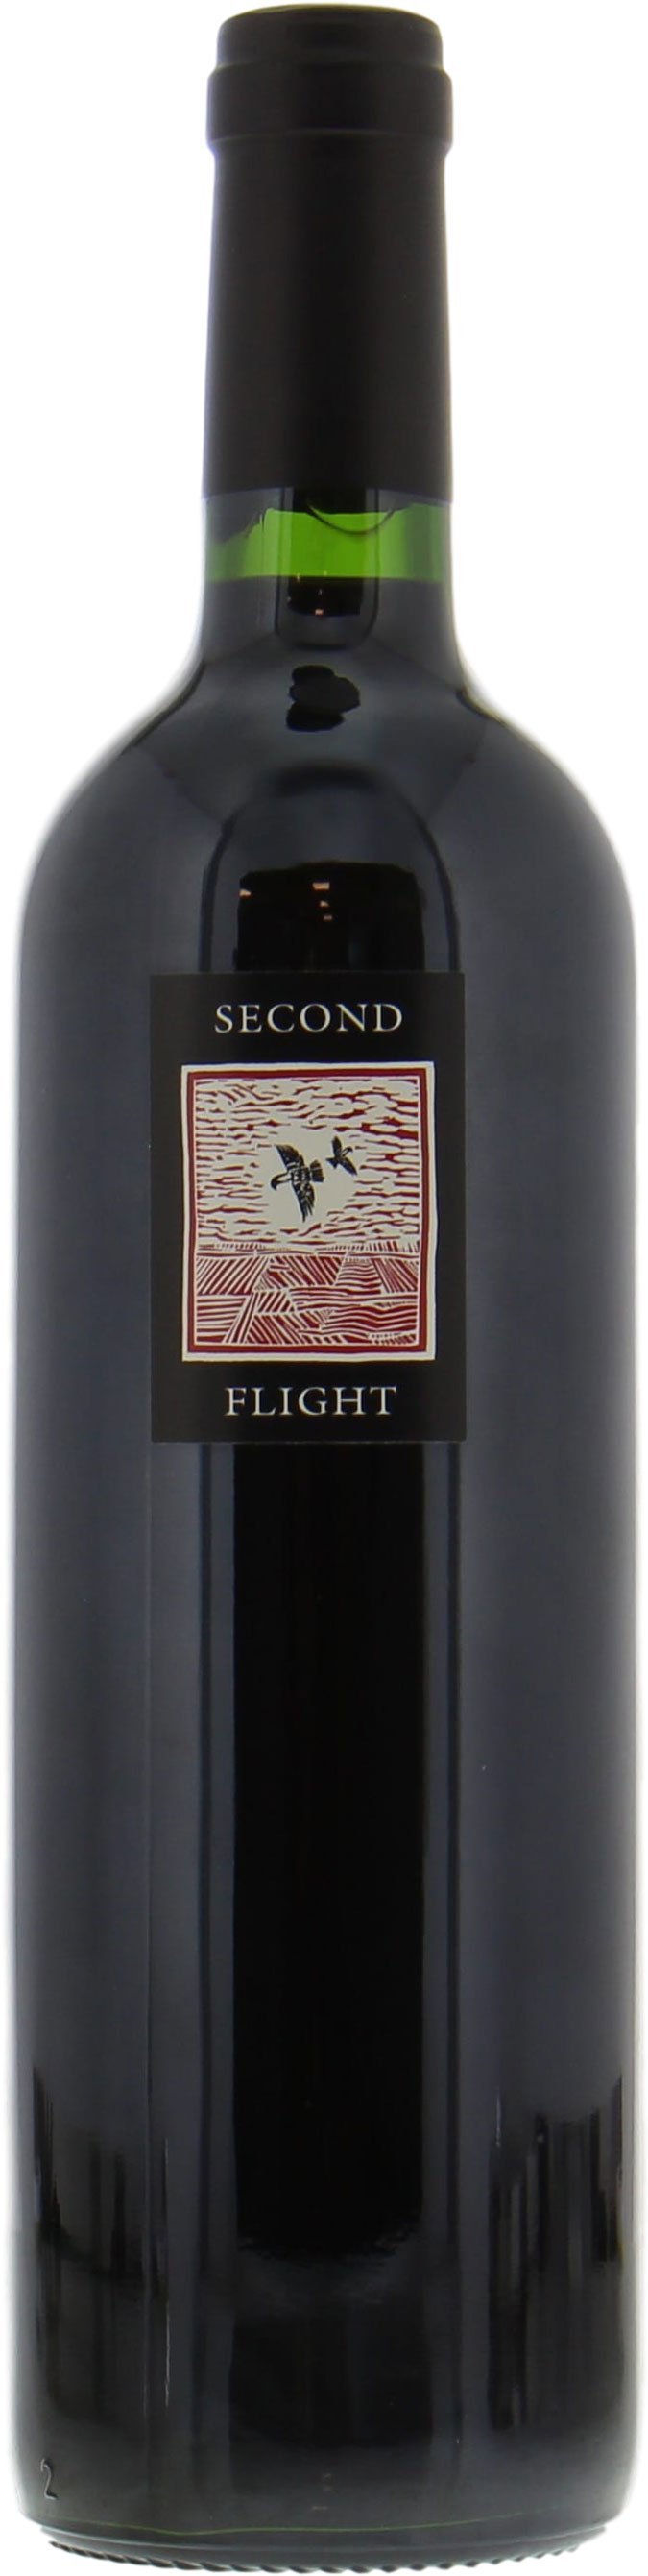 Screaming Eagle - Second Flight 2008